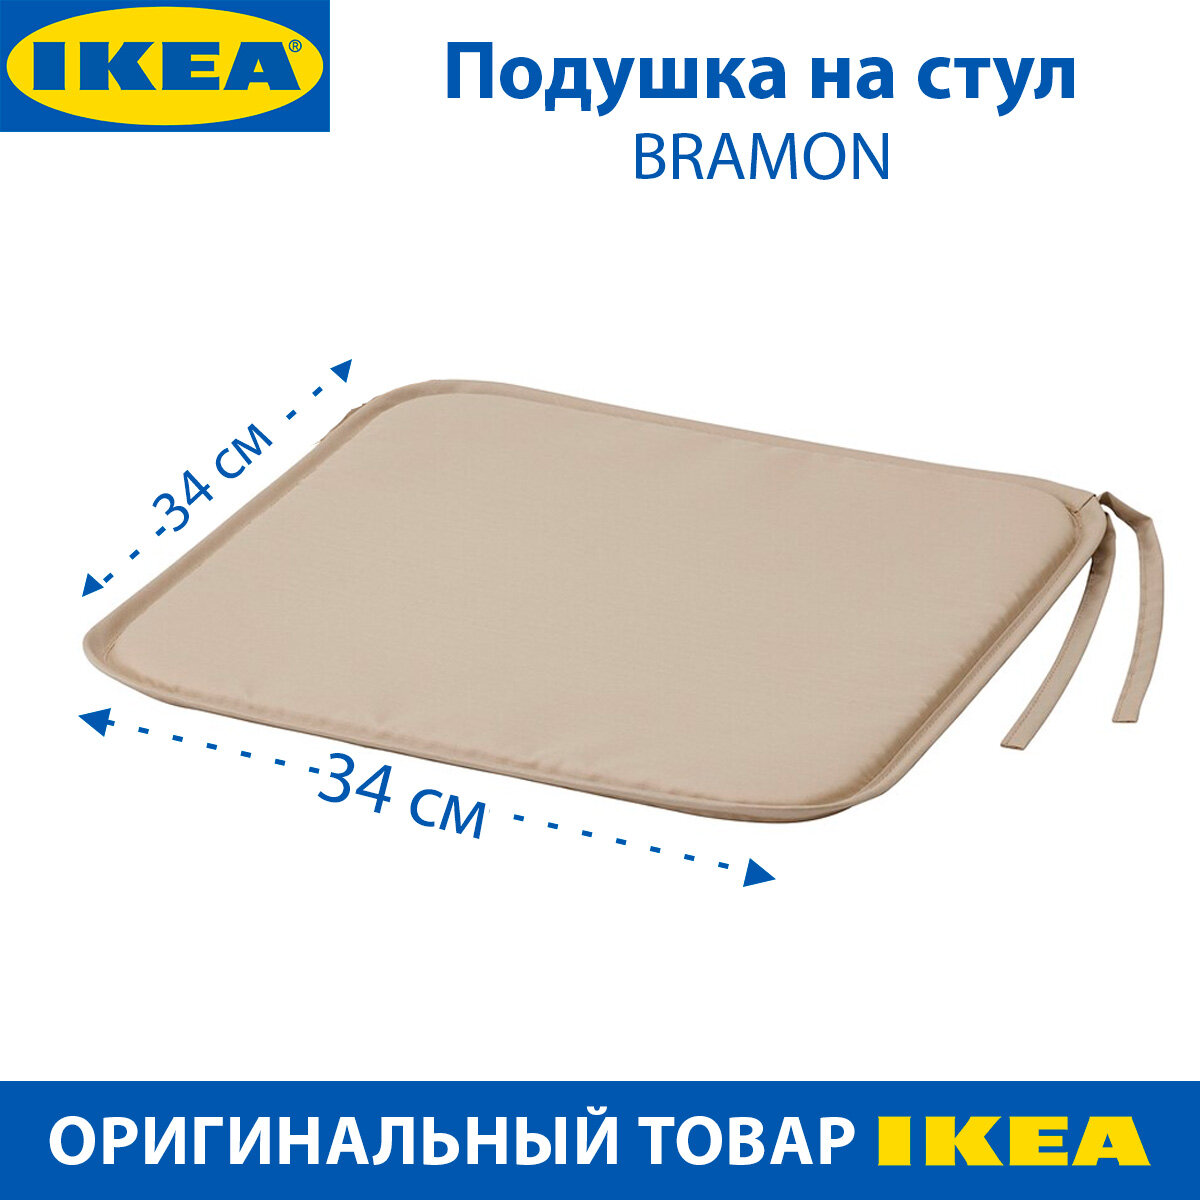 Подушка на стул IKEA - BRAMON (брамон), 34 х 34 см, полиэстер, 1шт